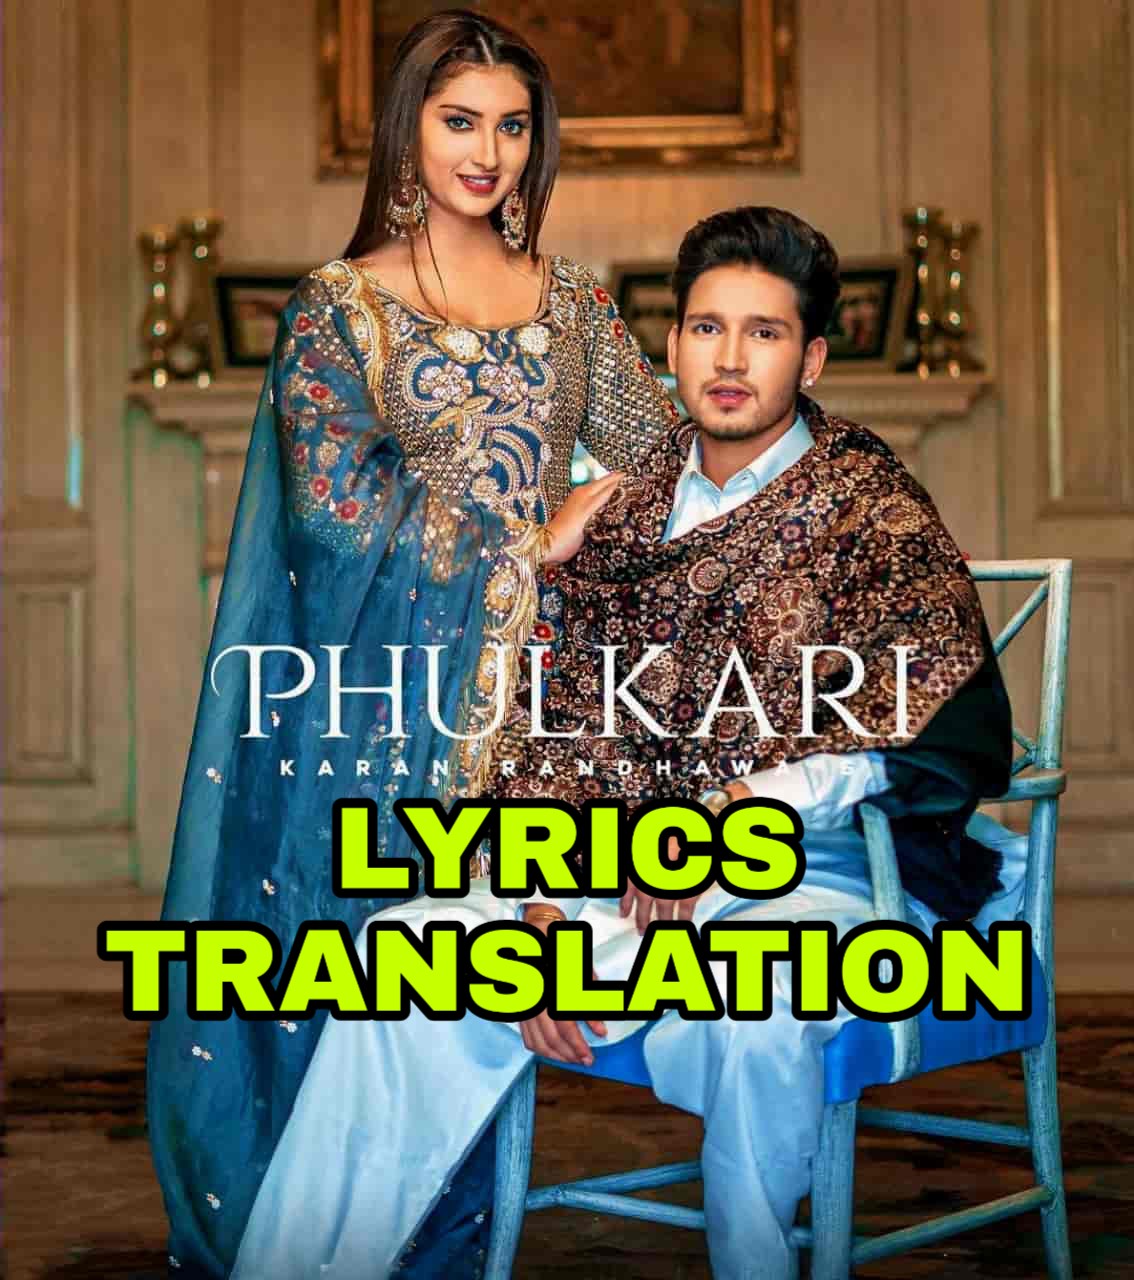 Phulkari Lyrics Translation in Hindi (हिंदी ) - Karan Randhawa